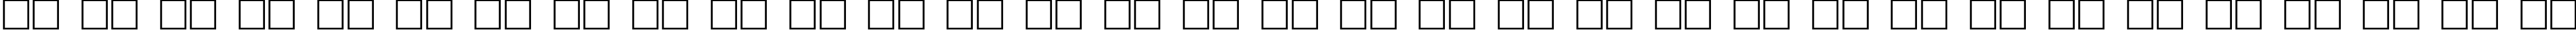 Пример написания русского алфавита шрифтом Symmetric Things